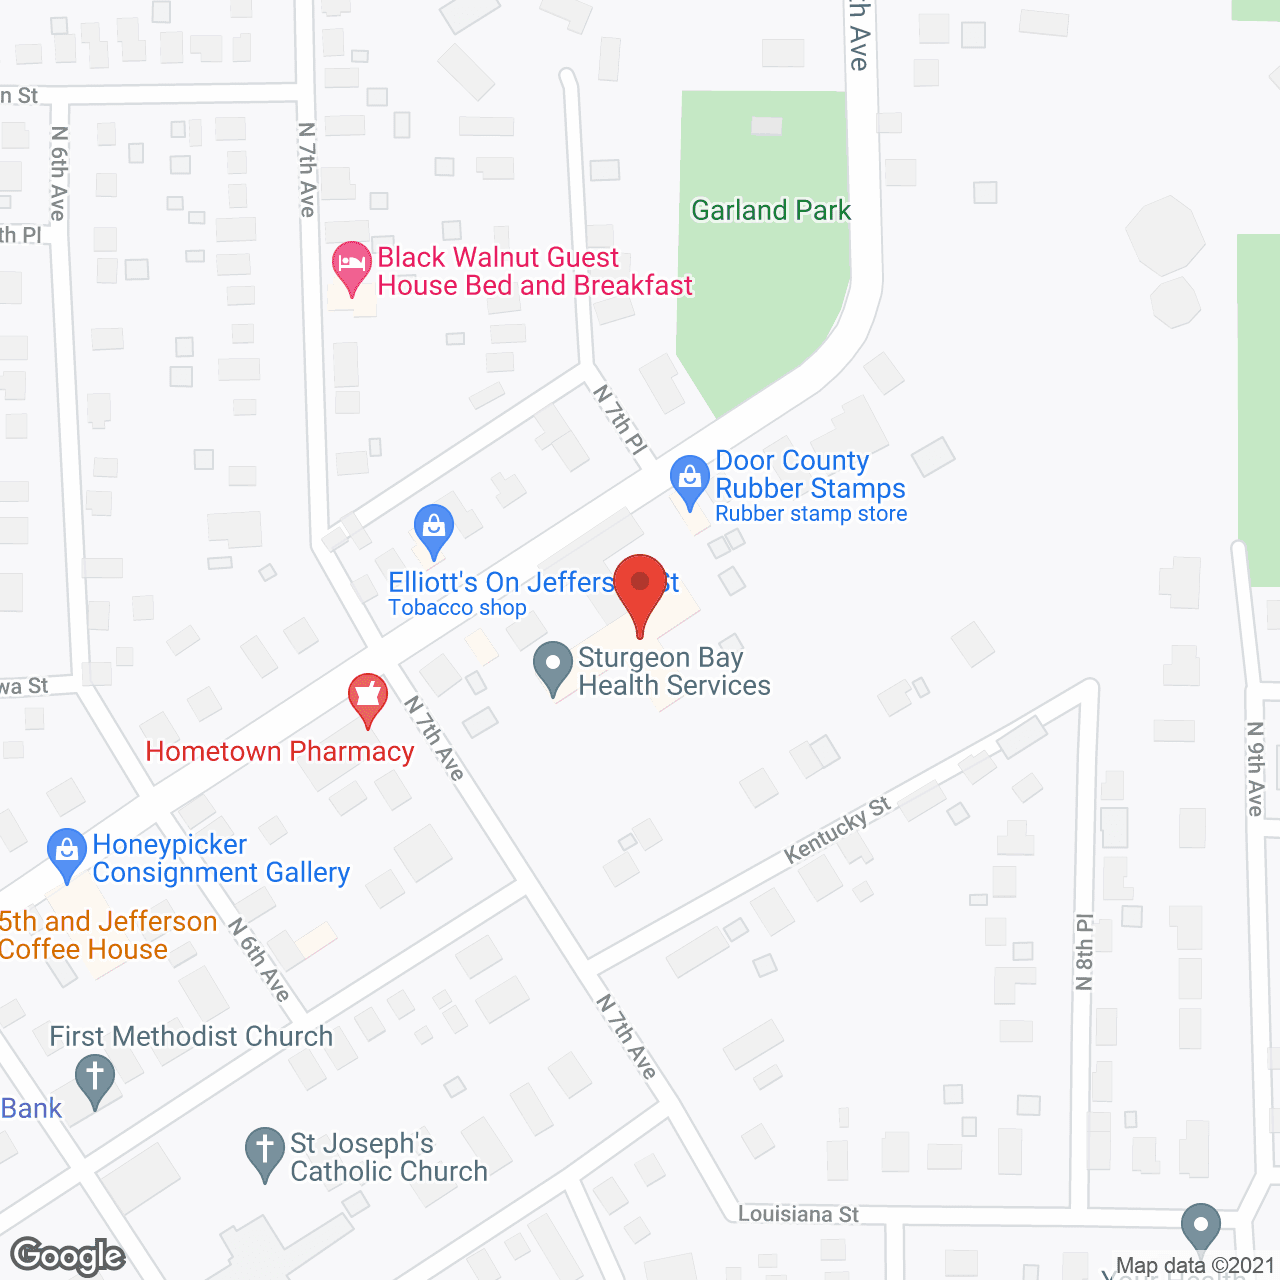 Golden LivingCenter – The Dorchester in google map